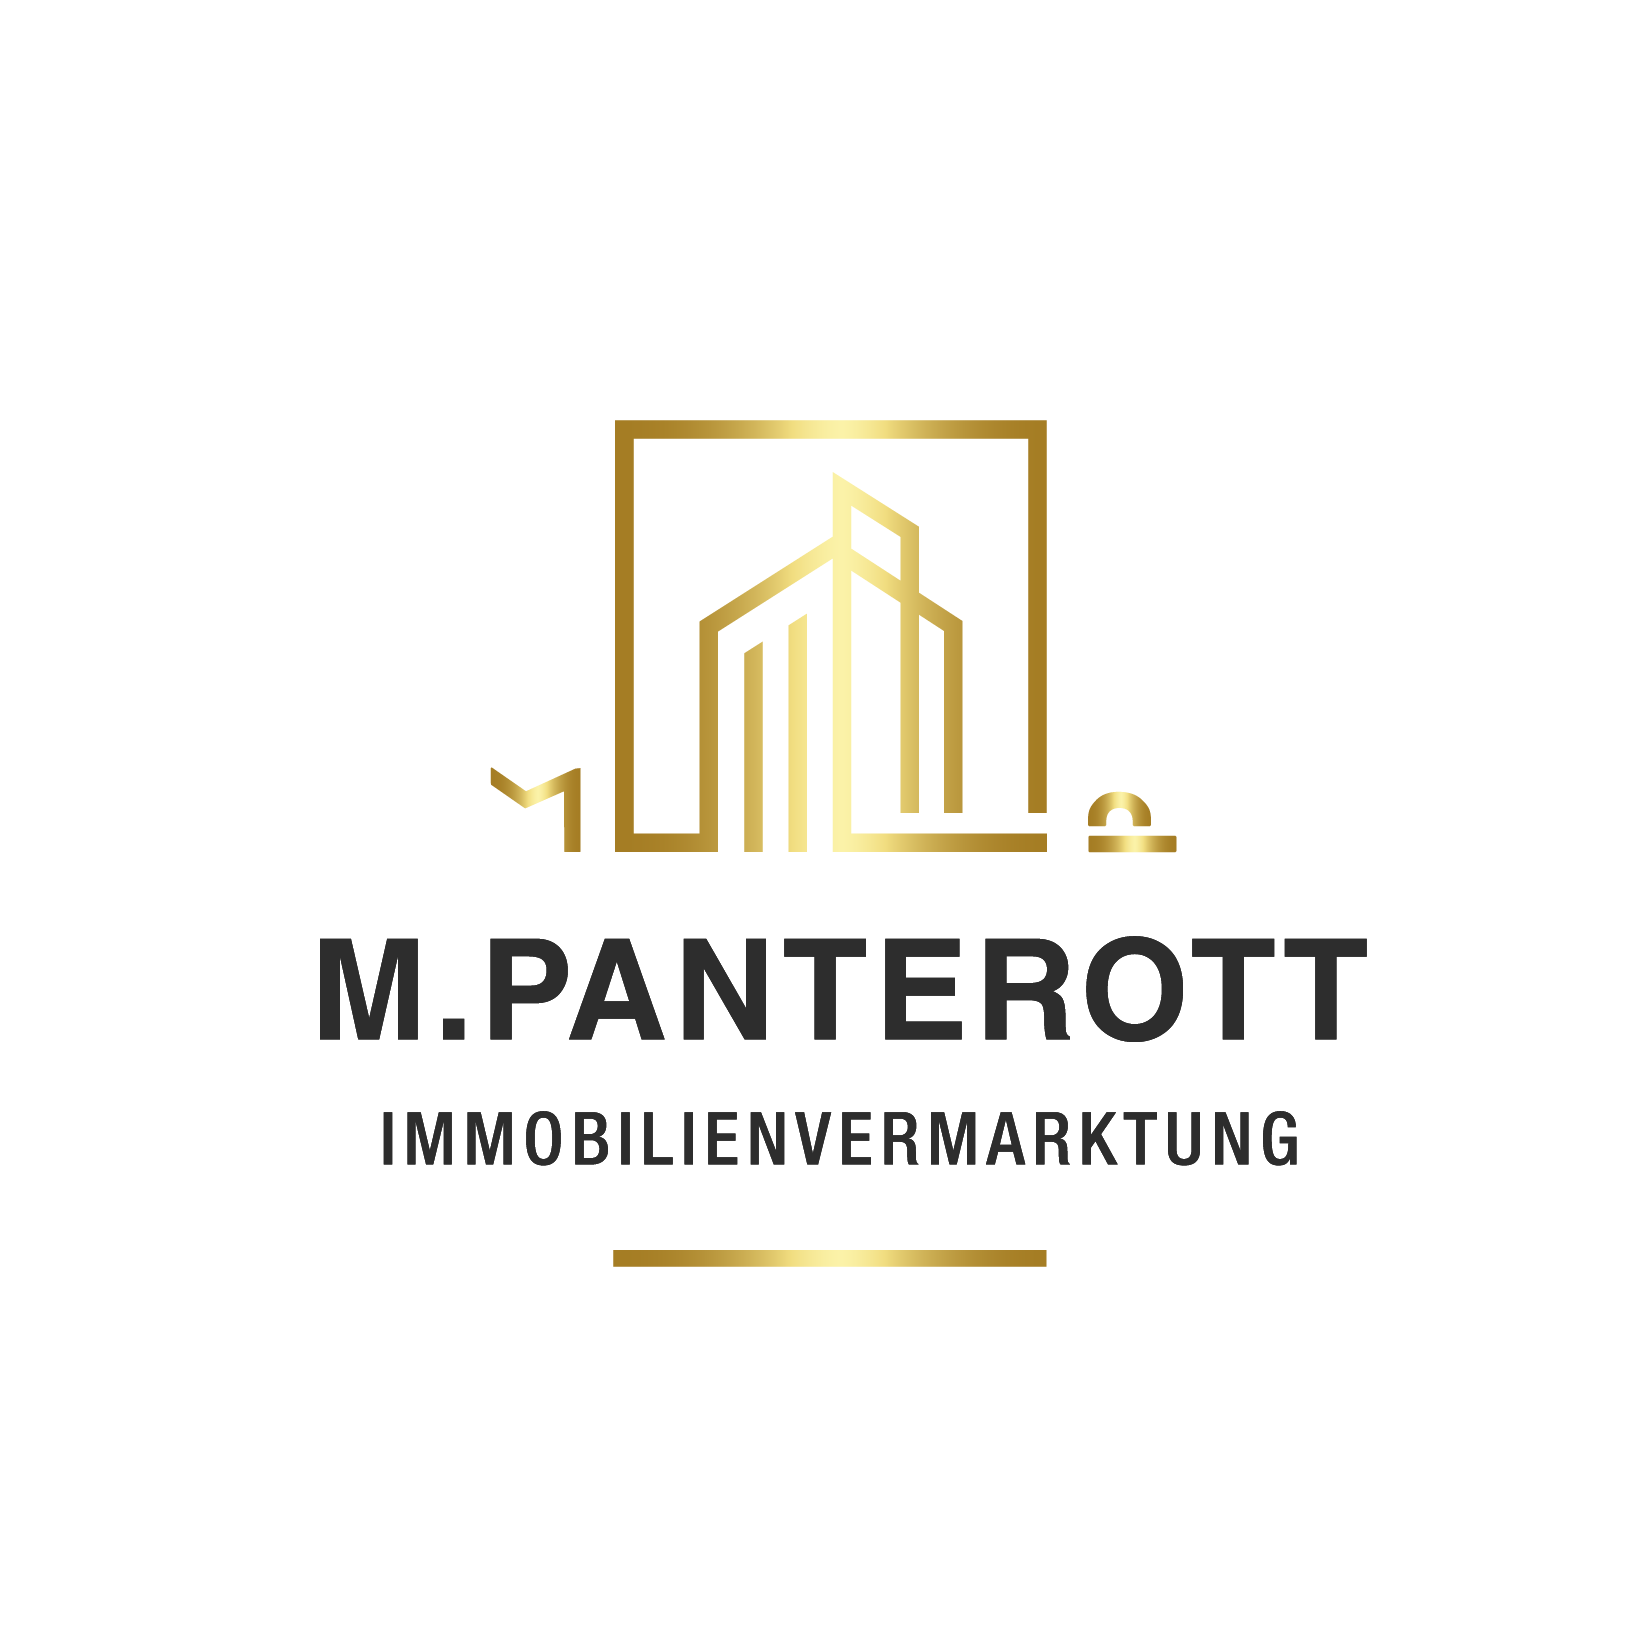 Immobilienvermarktung M. Panterott